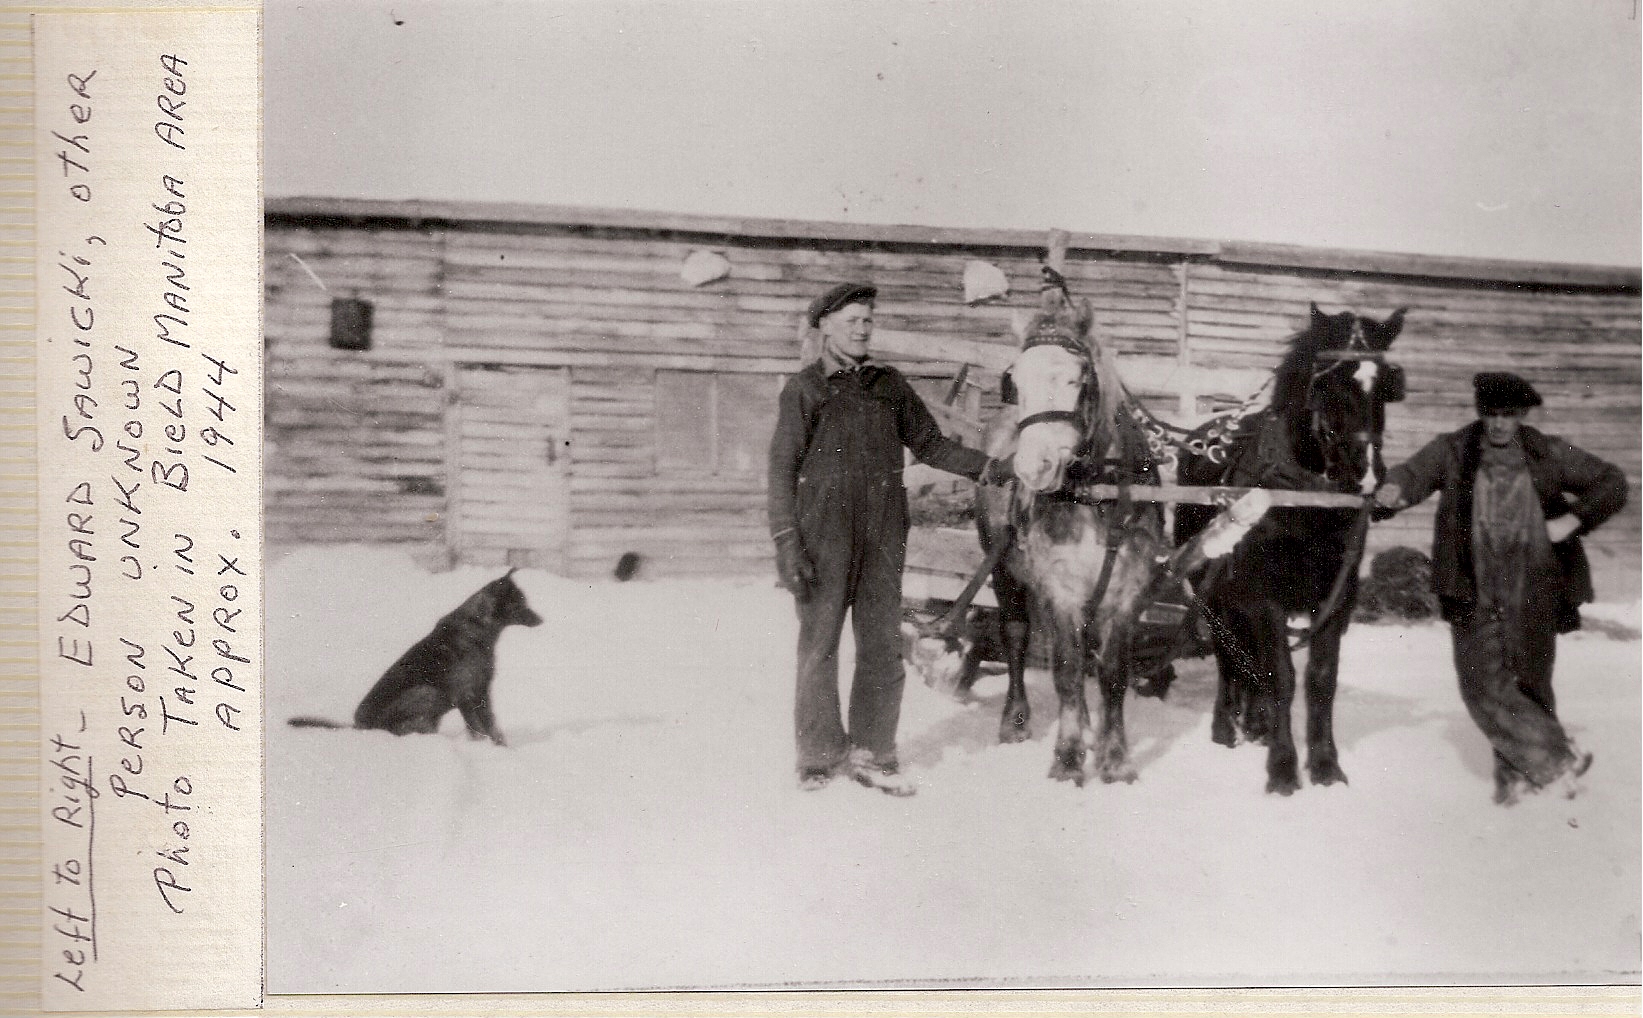 Ed Sawicki by horses on farm 1944